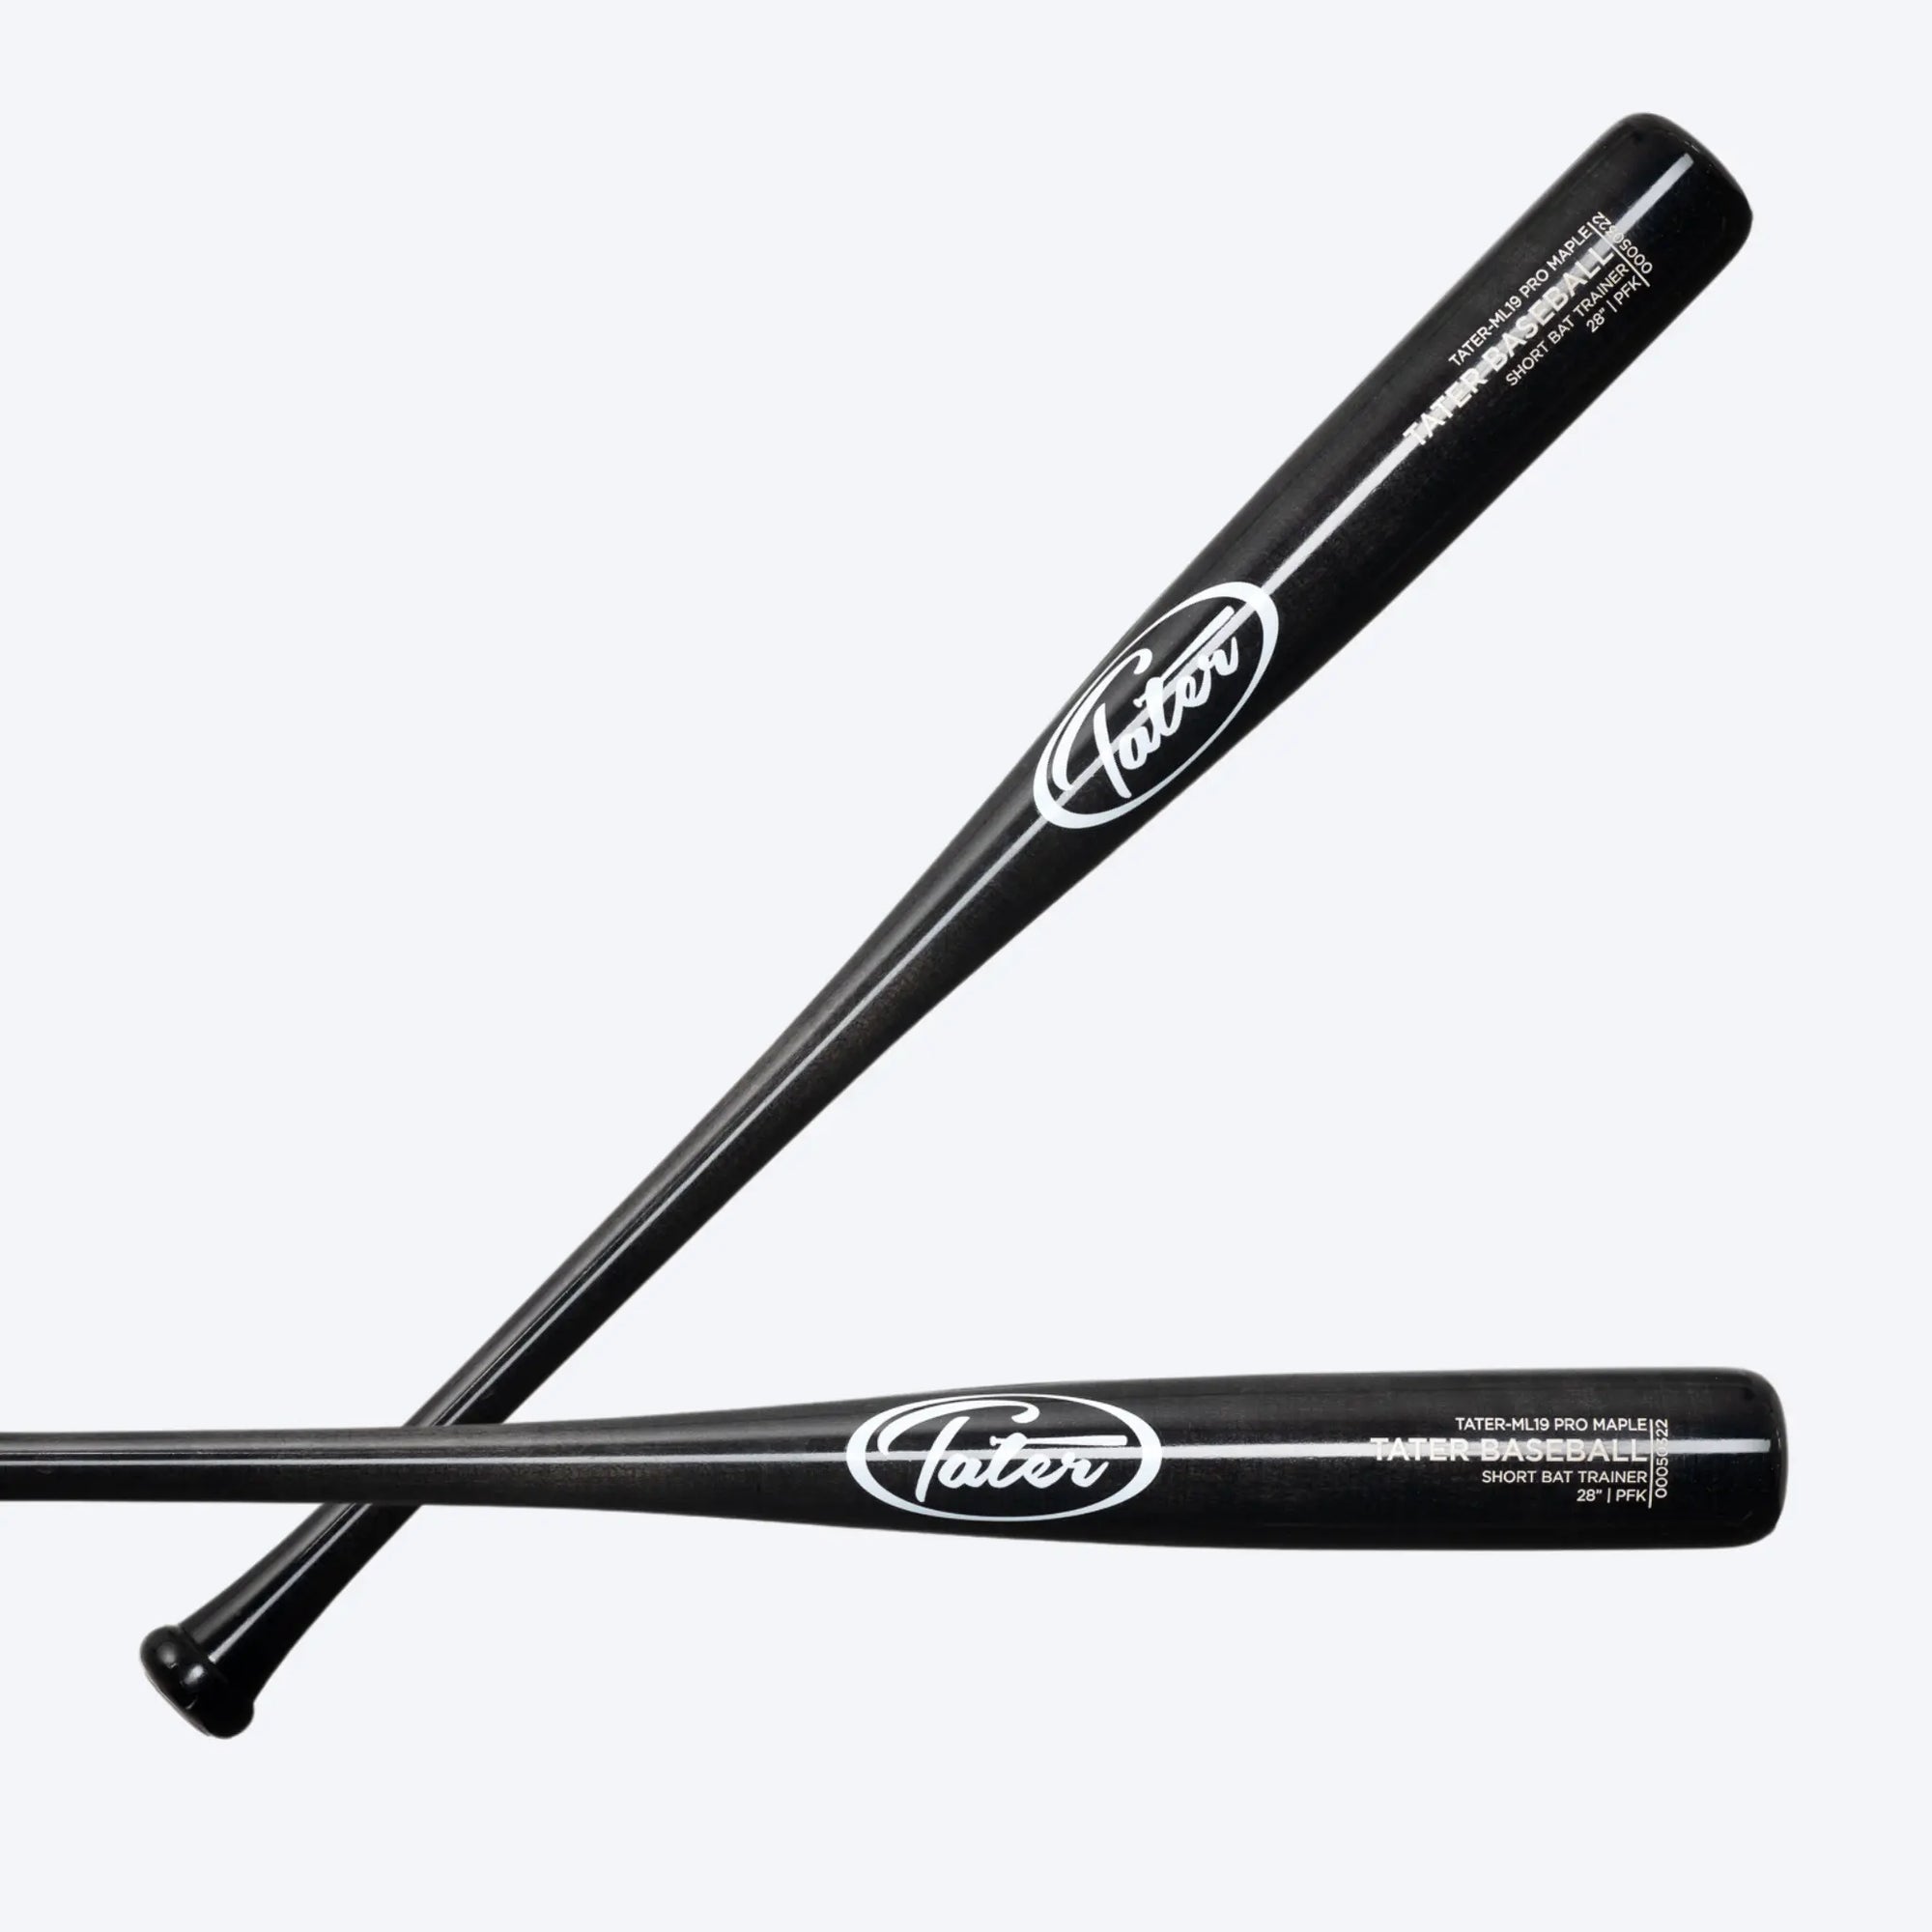 Tater Baseball - Premium Wood Baseball Bats and Baseball Equipment